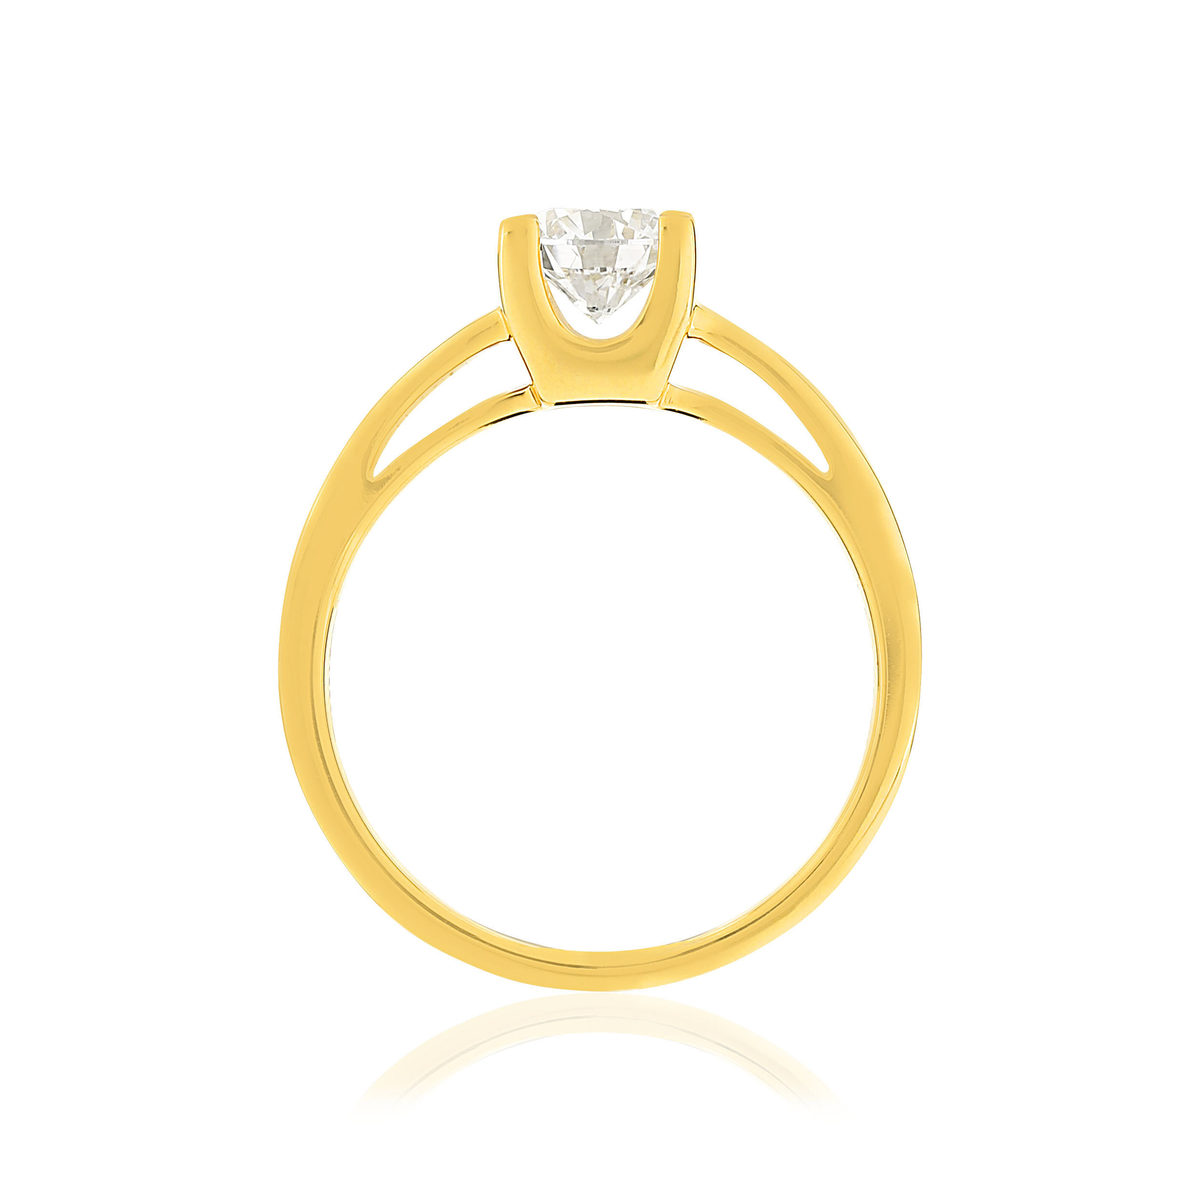 Solitaire or jaune 750 diamant synthétique 0.75 carat - vue 2